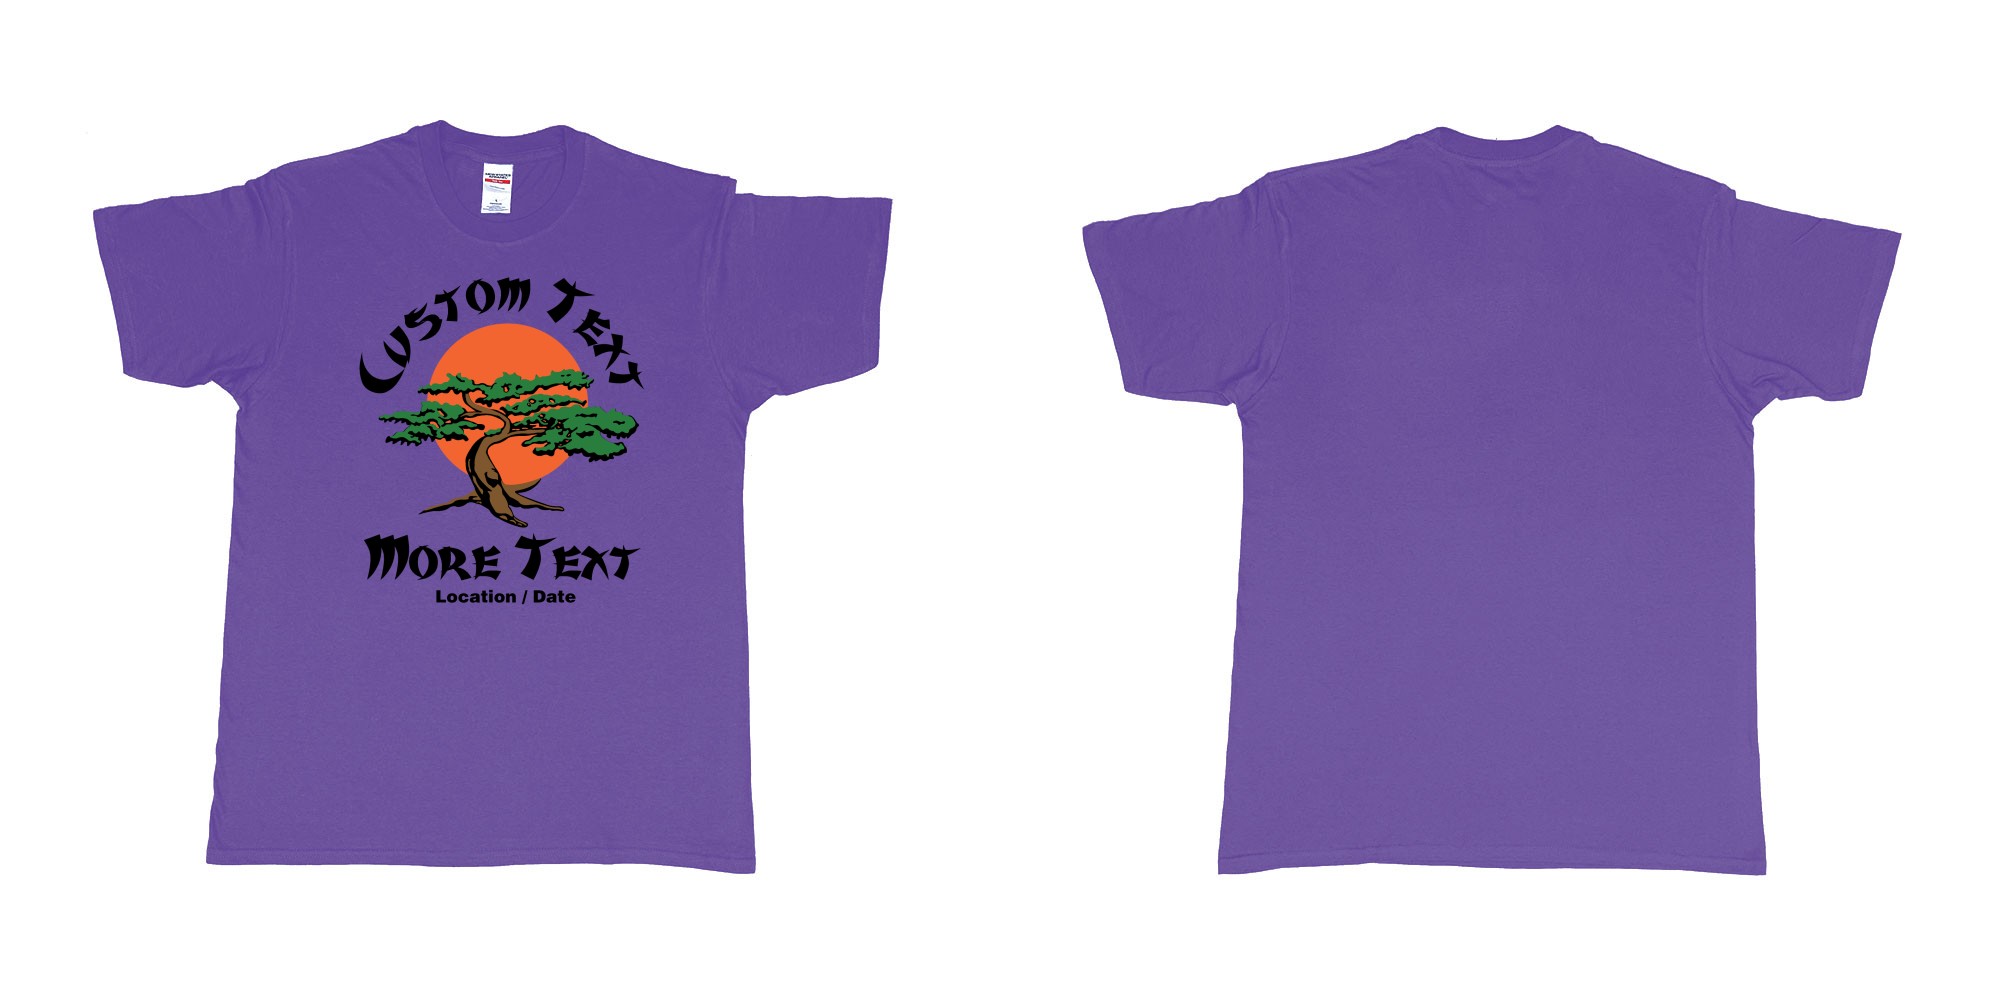 Custom tshirt design karate kid miyagi dojo karate logo custom text in fabric color purple choice your own text made in Bali by The Pirate Way